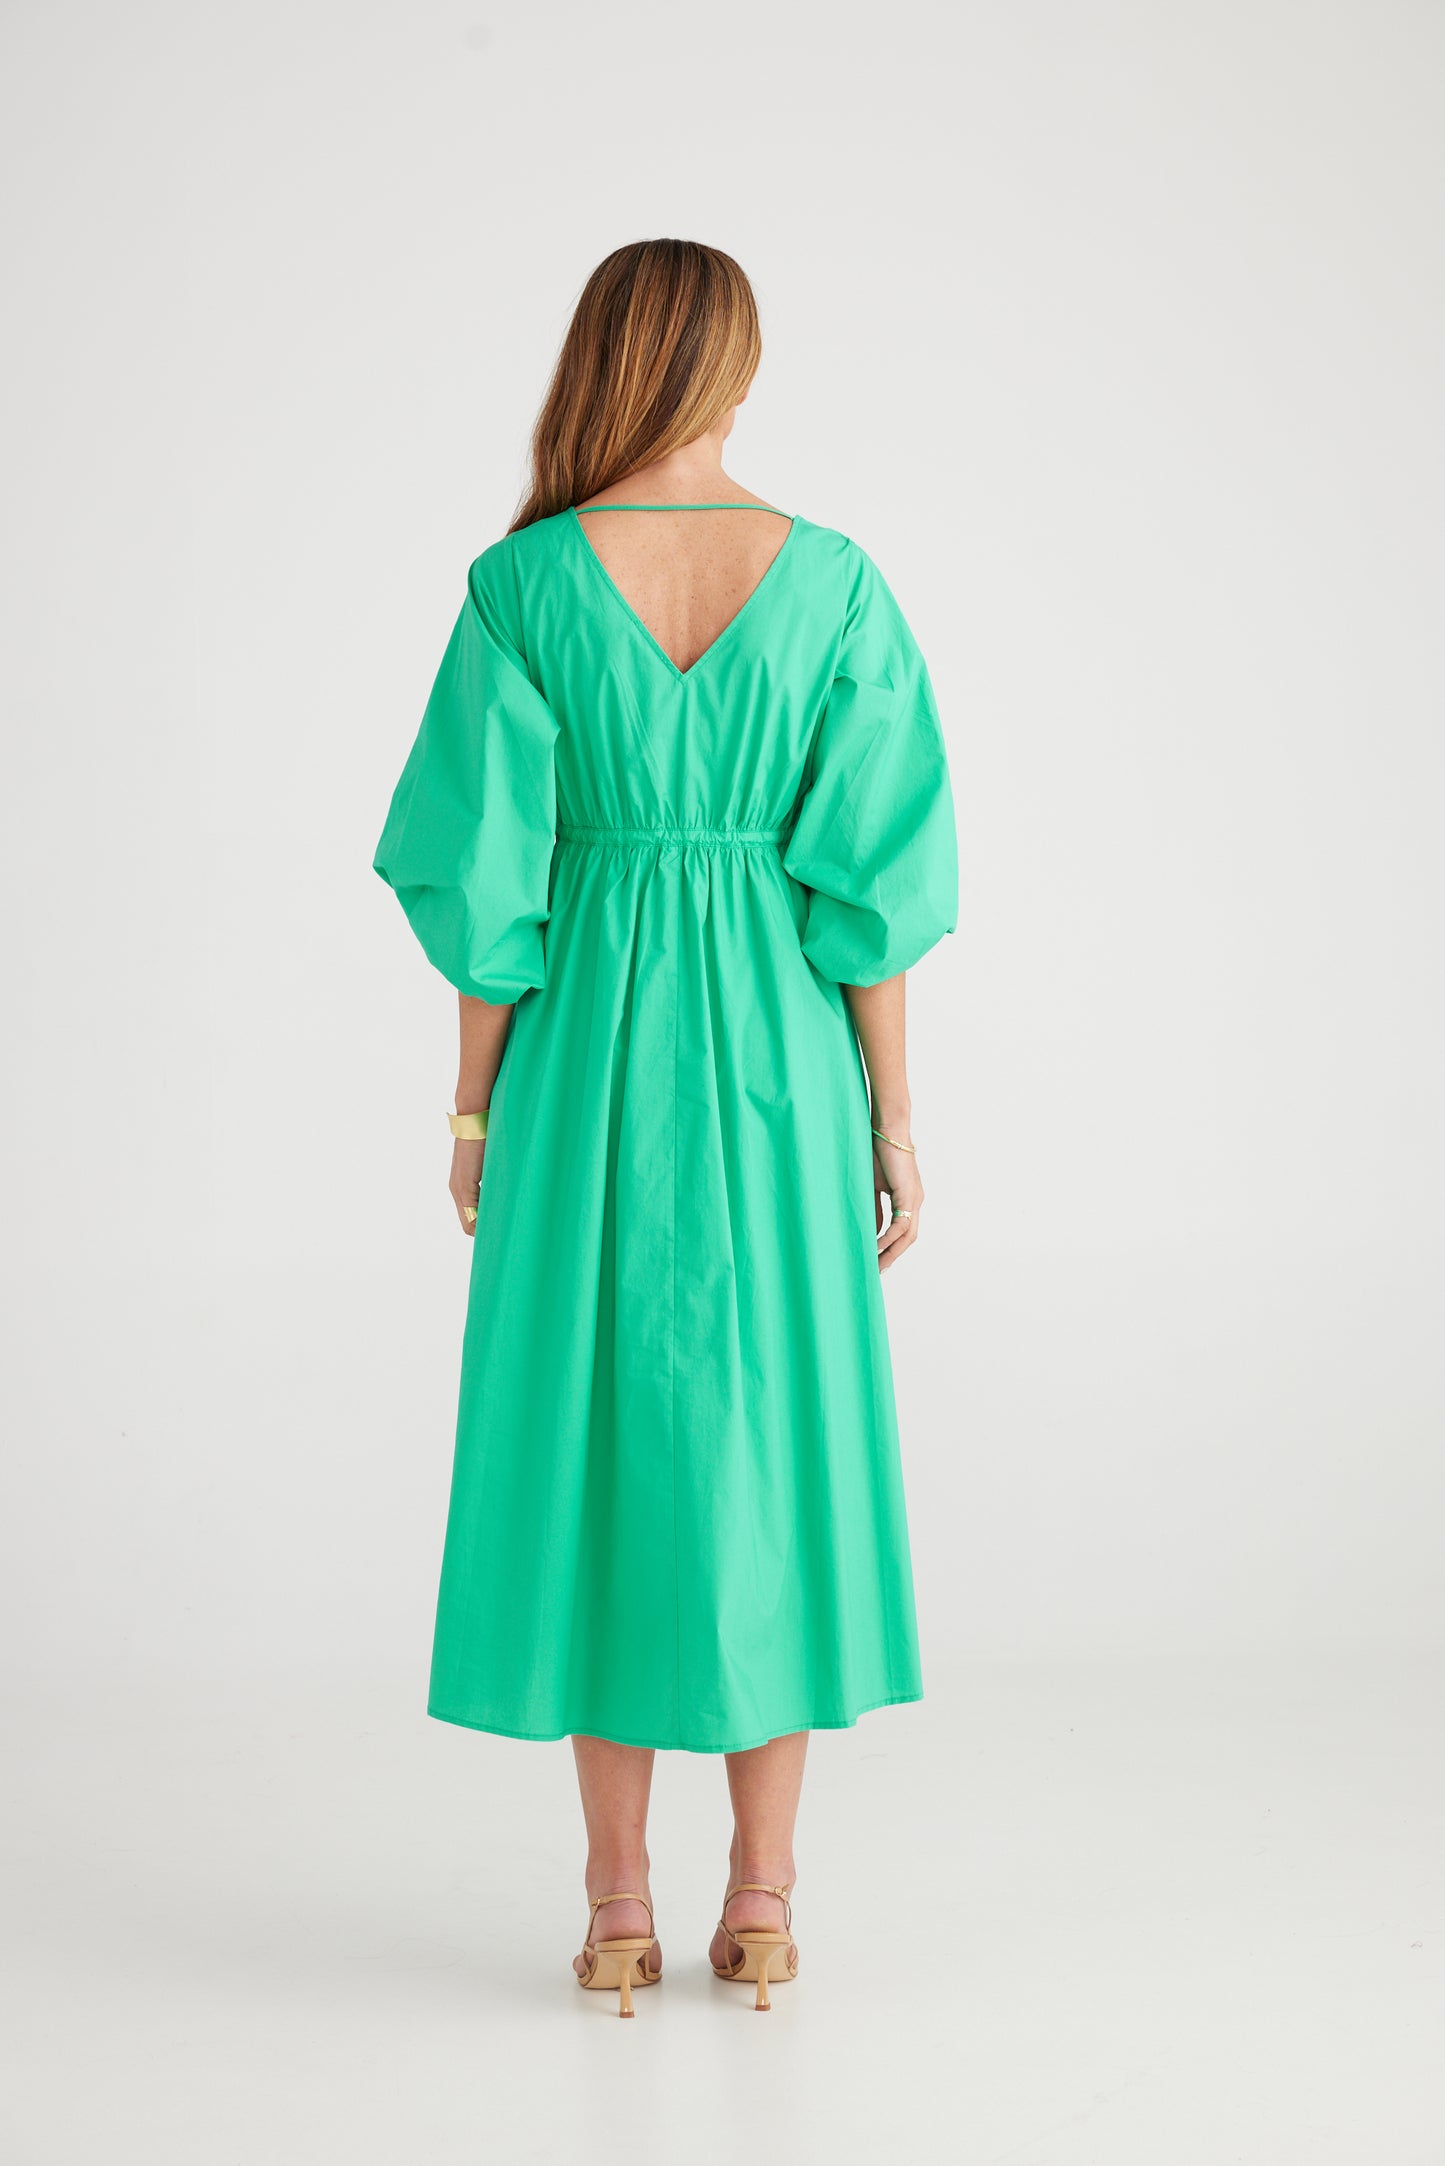 Brave + True - Sunshine Dress Green | BT7104-1